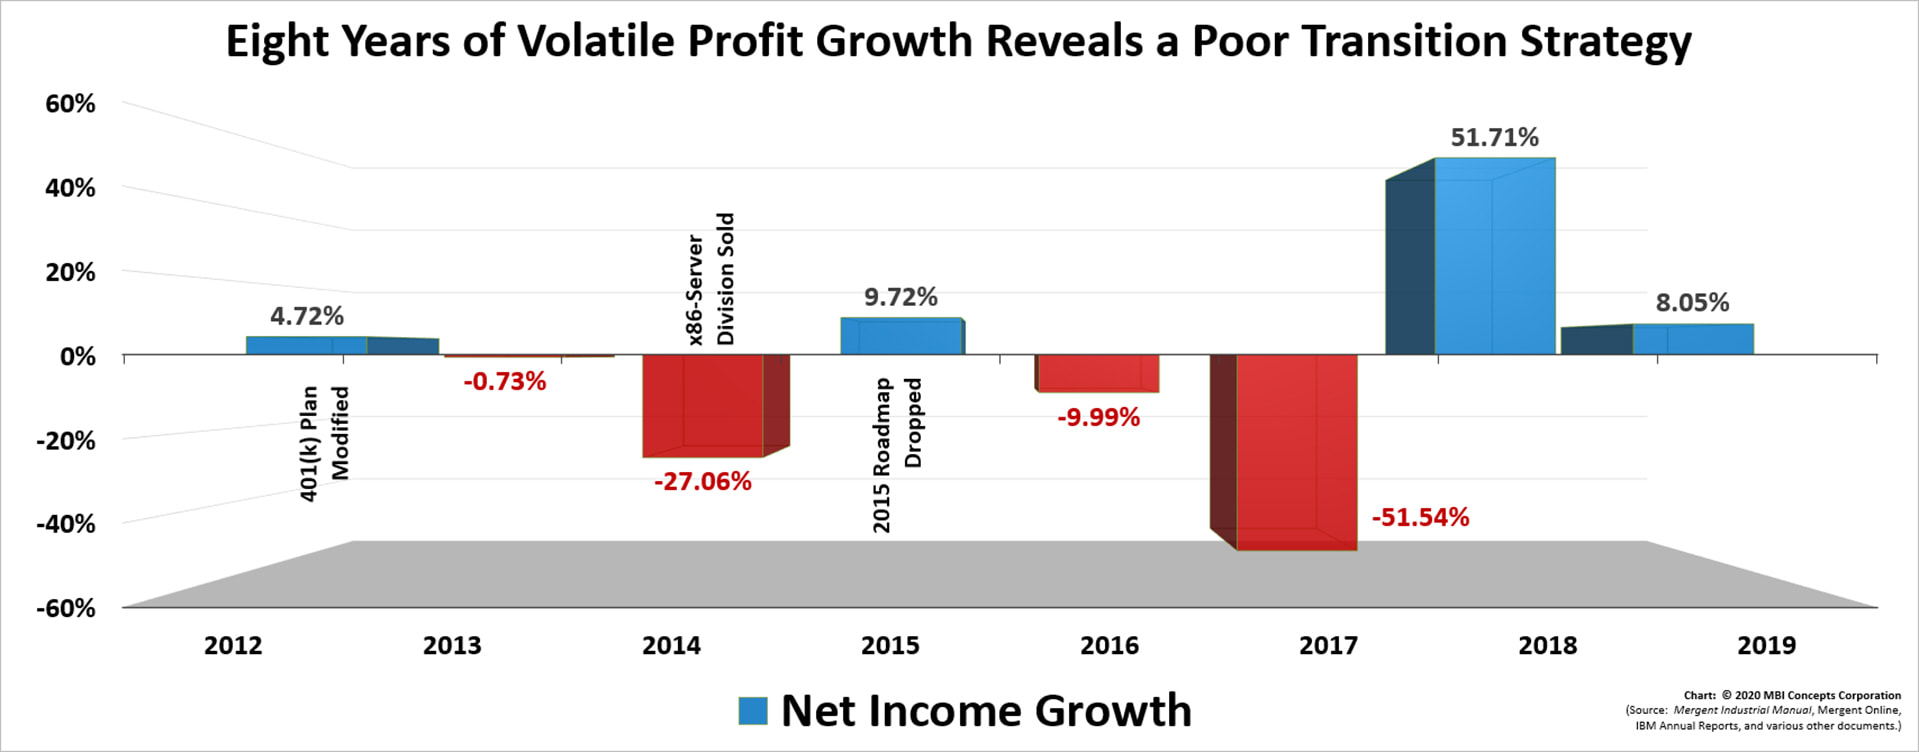 Virginia M. (Ginni) Rometty's Profit (Net Income) Growth Performance as IBM's CEO: 2012 through 2019.